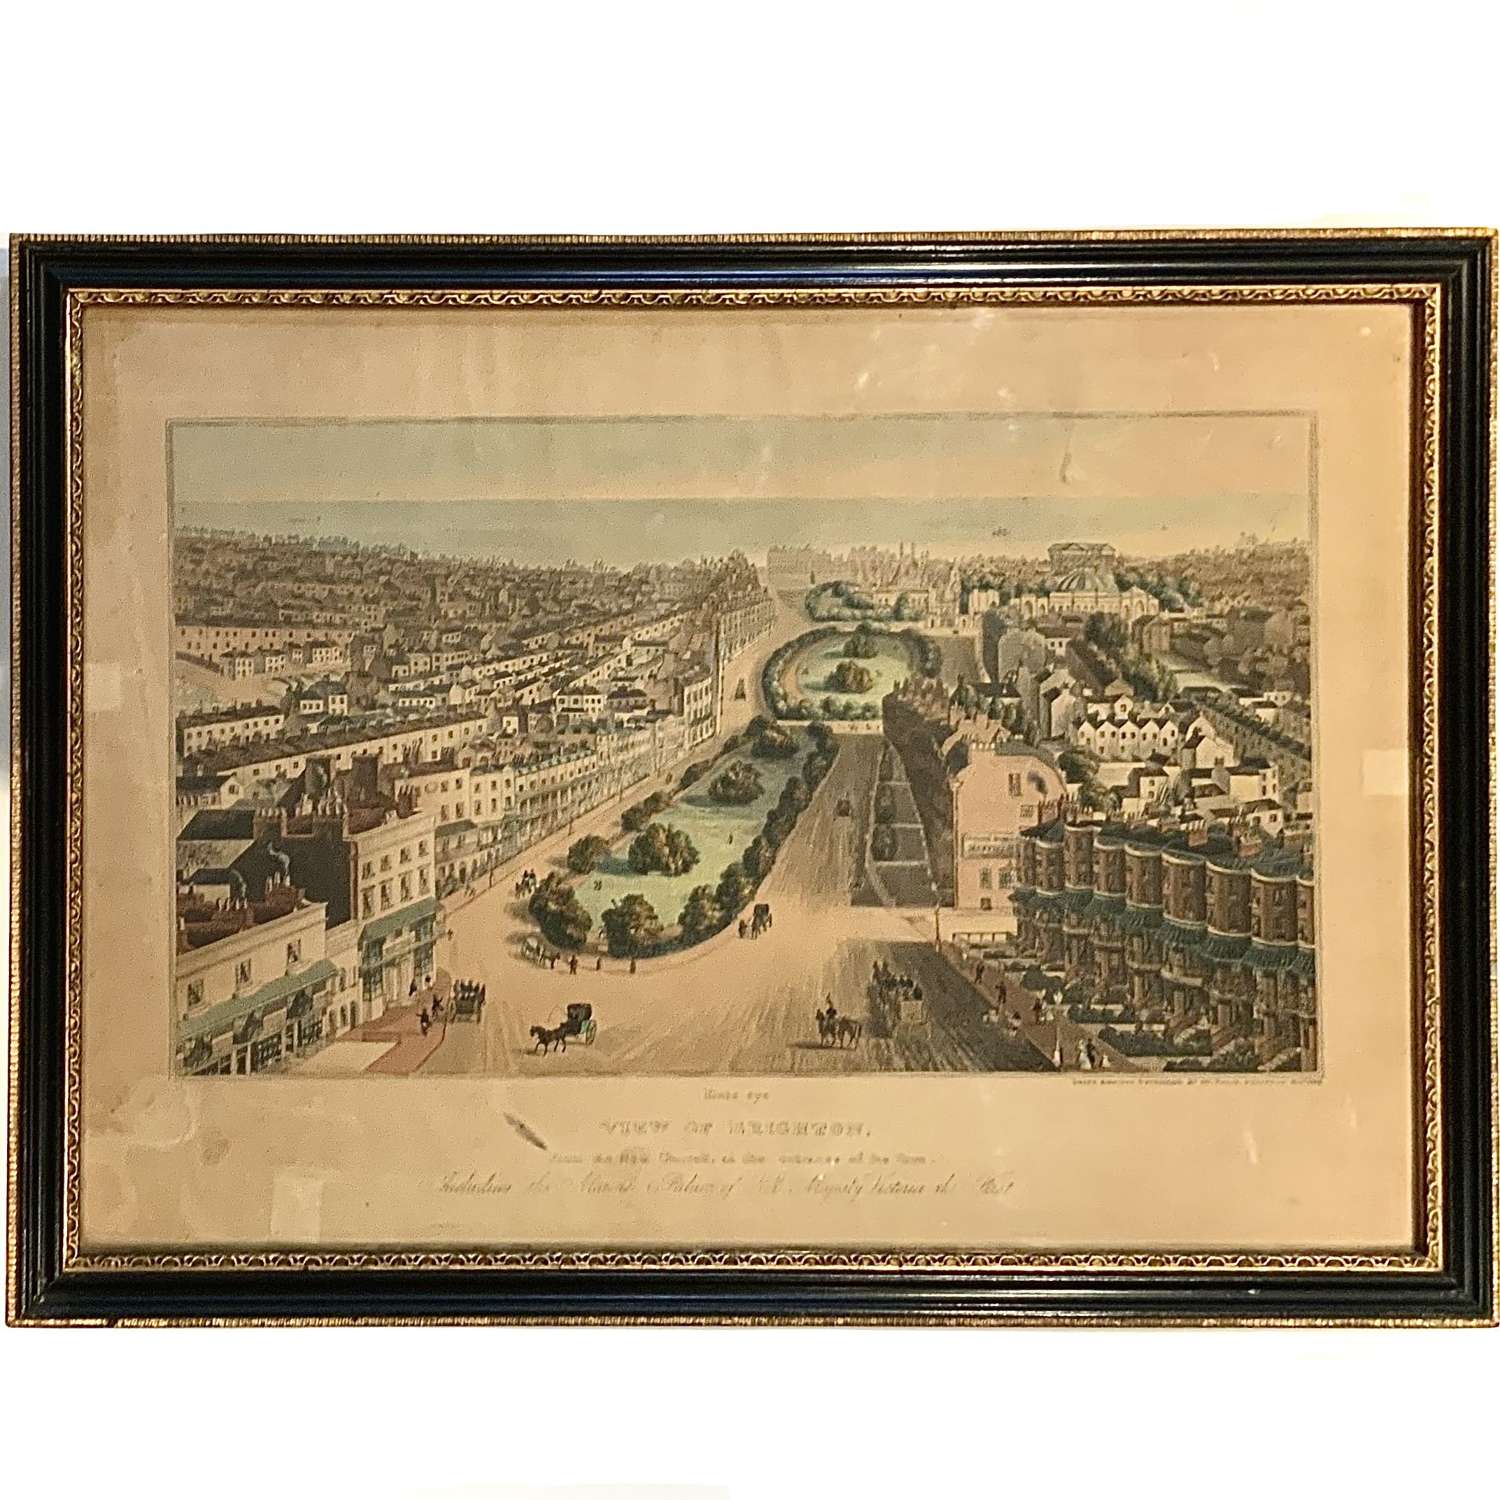 A Very Scarce Antique “Birds Eye View of Brighton” Print